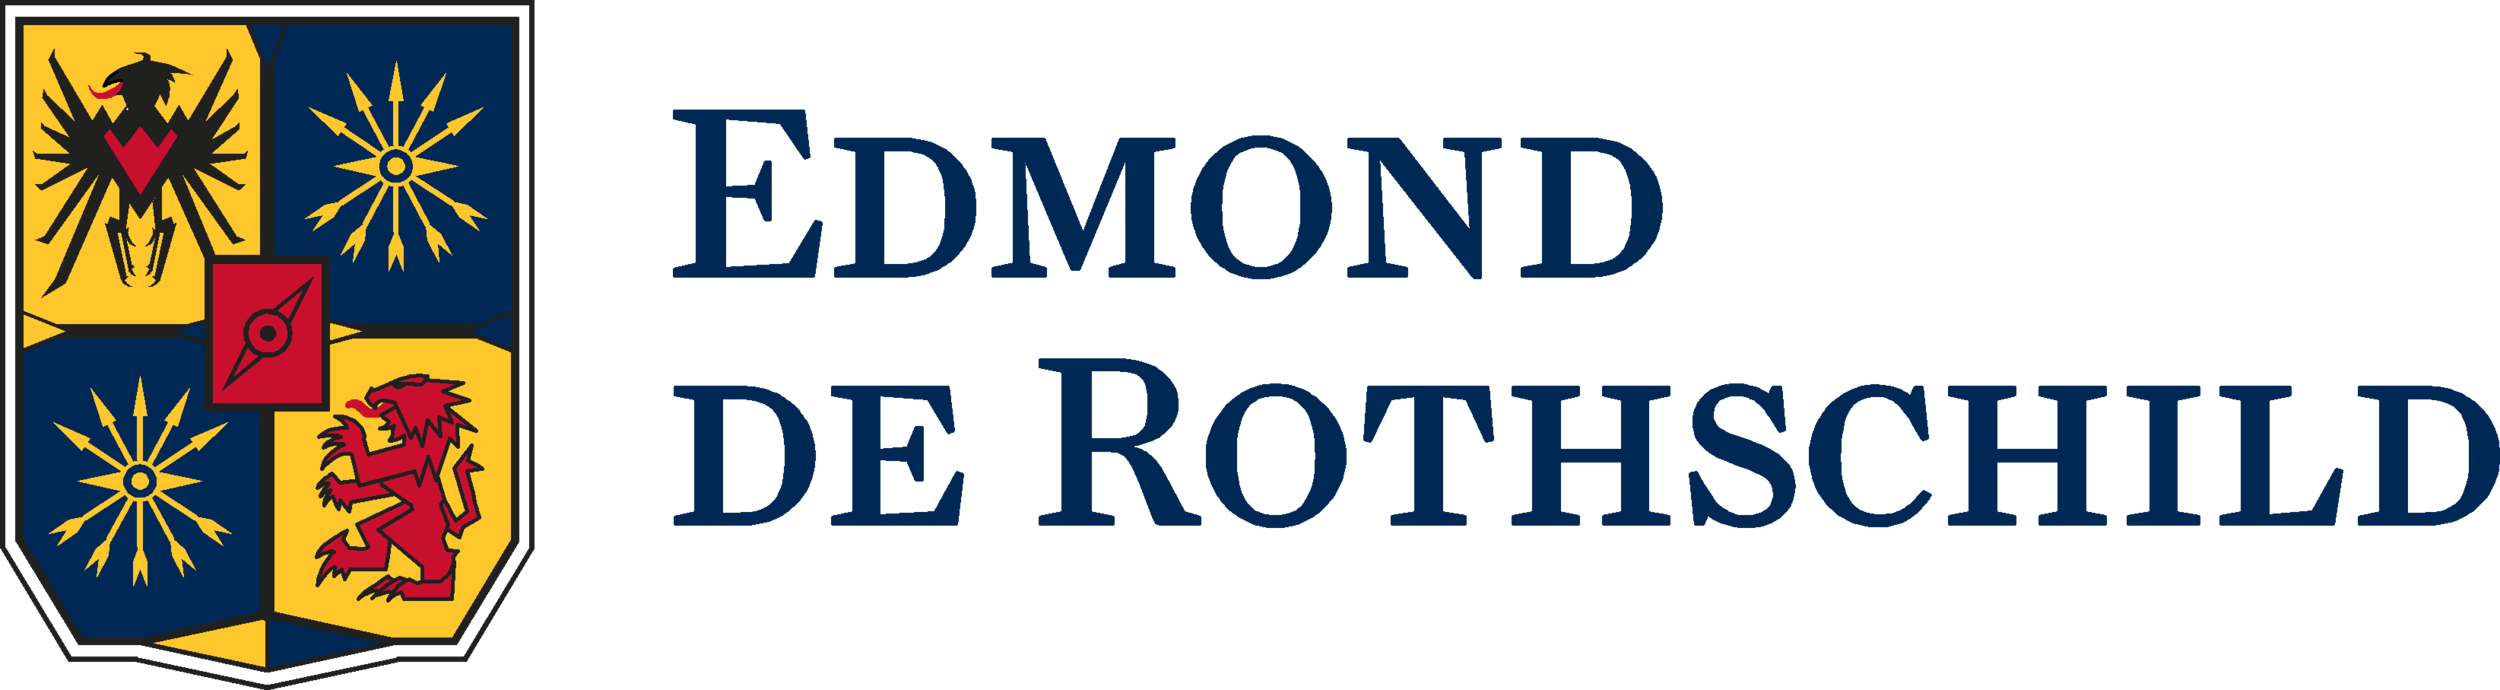 edmond-de-rothschild-private-equity-france.png